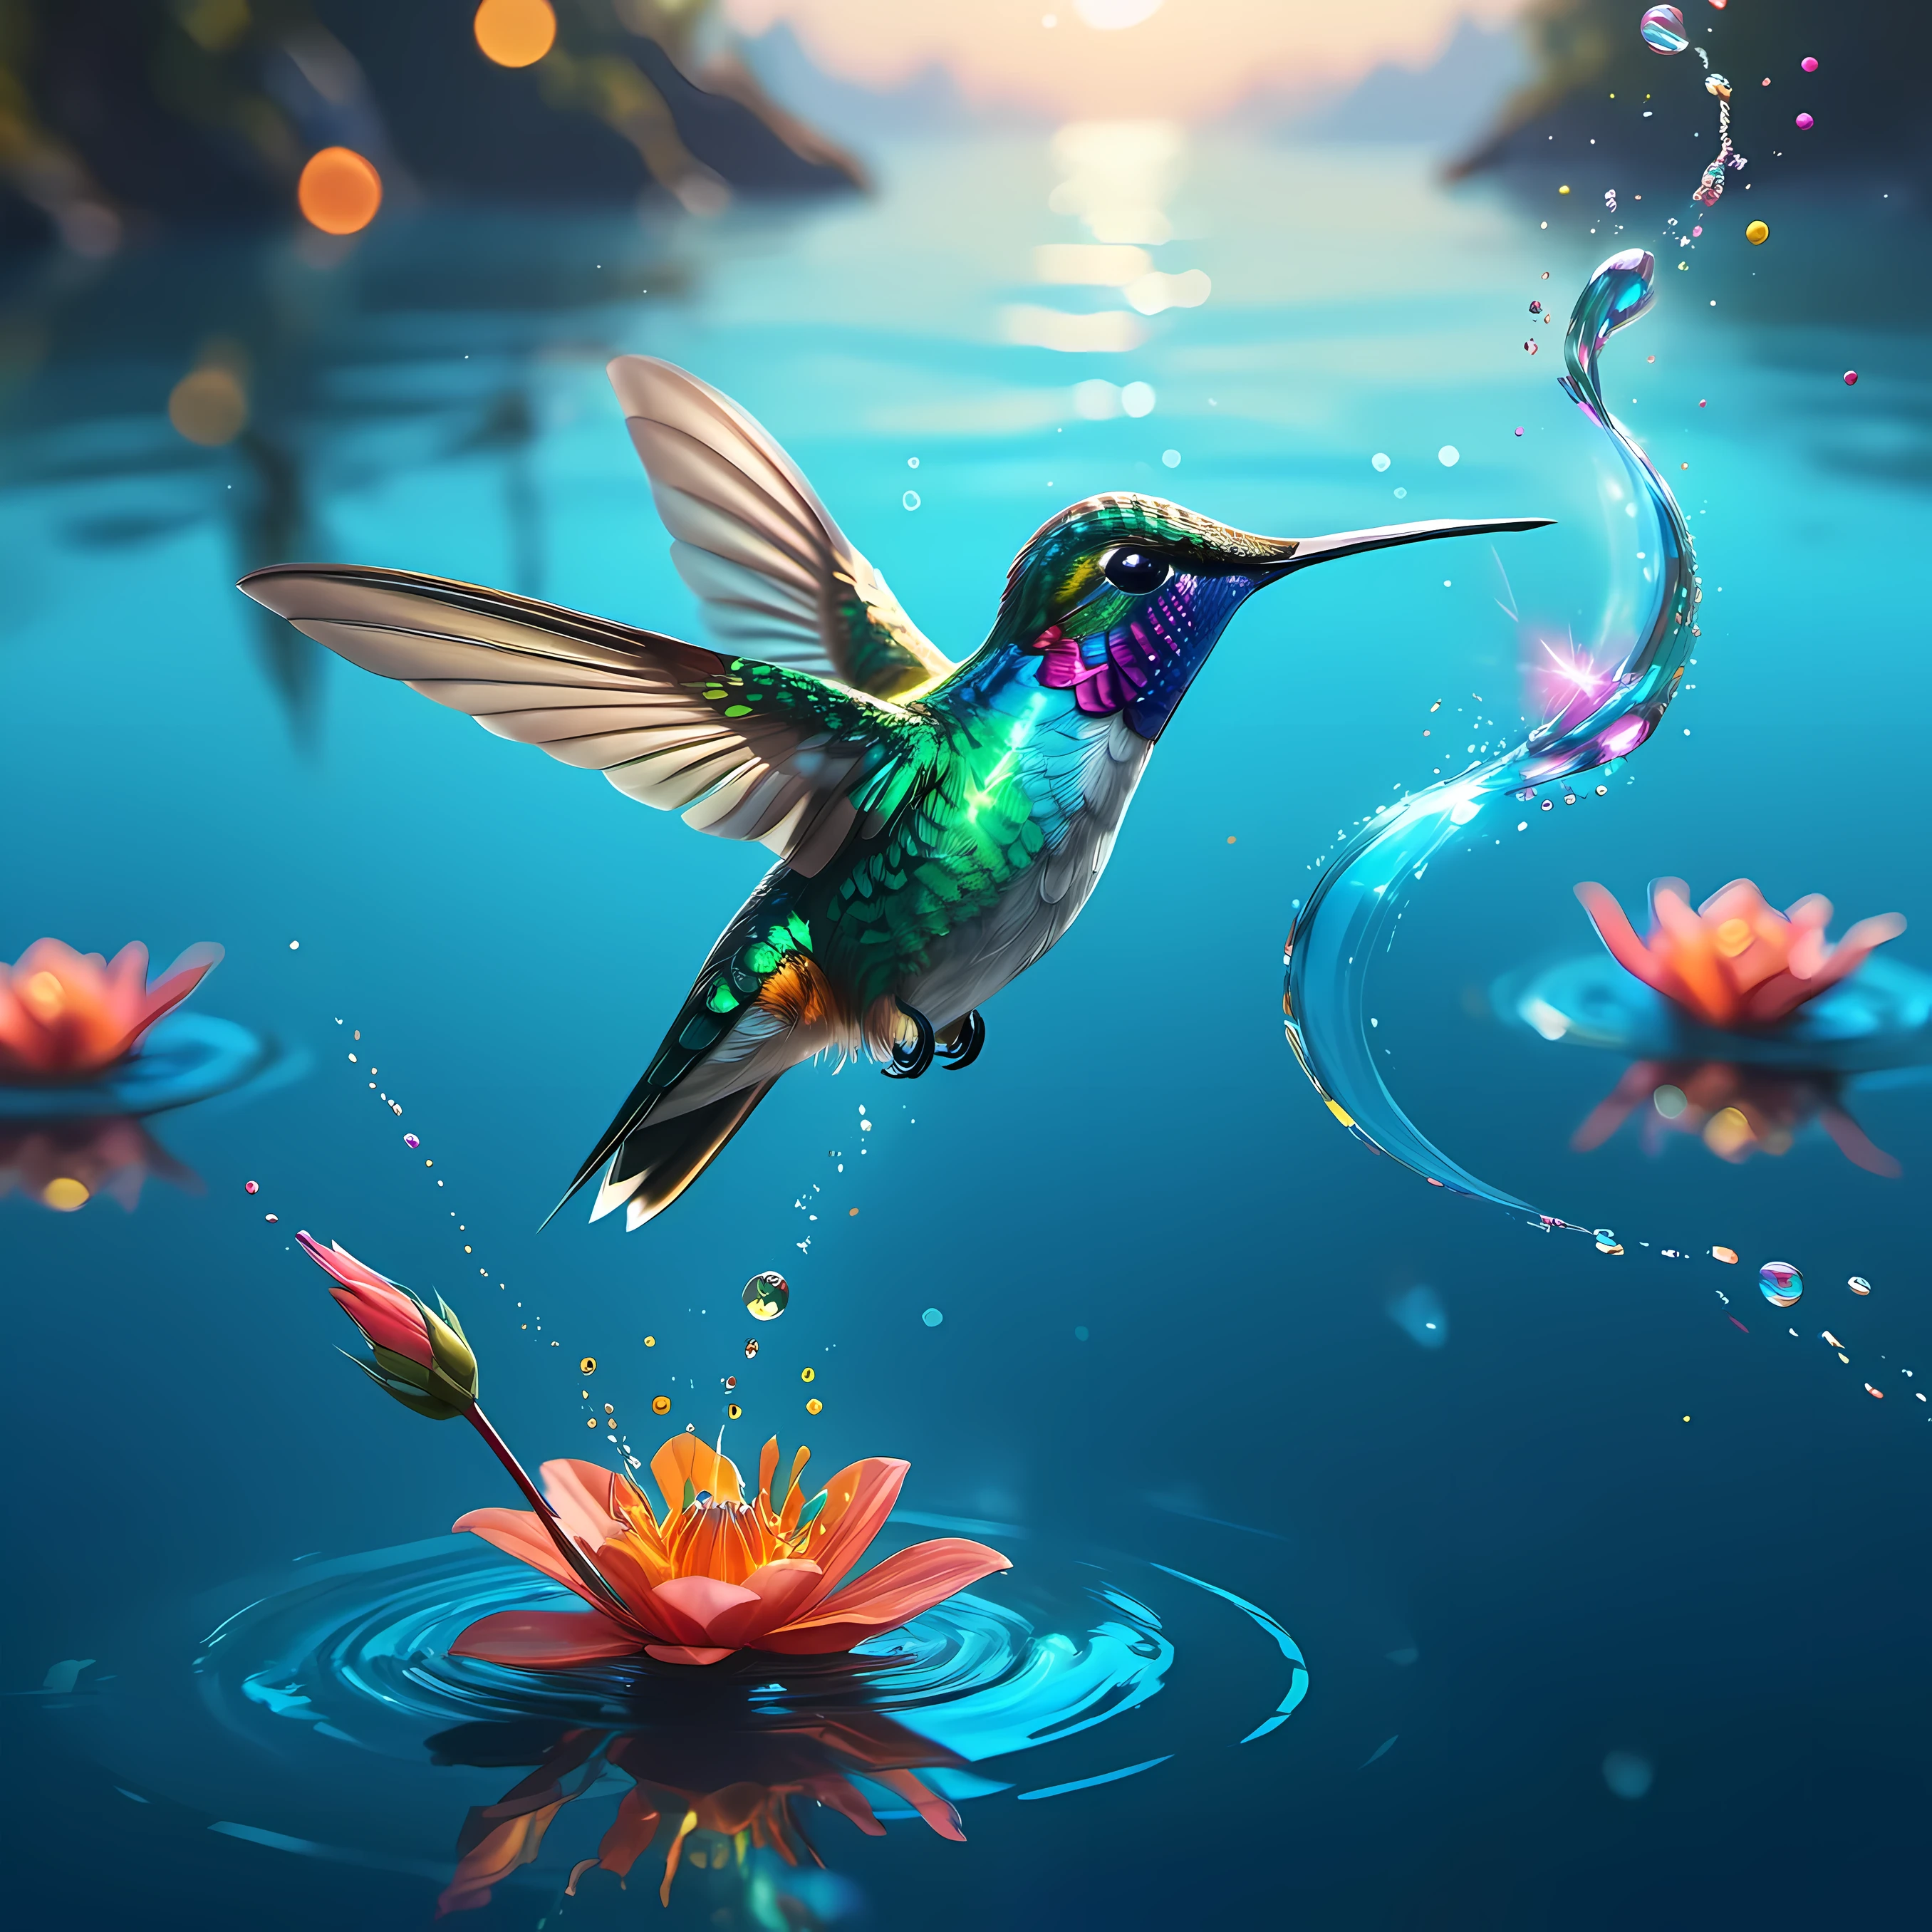 4K 超详细数字艺术作品捕捉了蜂鳥在宁静的蓝色水面上迷人的飞行, 讓人想起麥克溫克爾曼 (迈克·温克尔曼) 創作出栩栩如生的畫作 (蜂鳥) 類似於屢獲殊榮的自然攝影的生動感. 場景描繪了鳥兒在水面上優雅地滑翔, 它的整個身體都散發著虹彩, 尤其是它的眼睛, 像兩顆璀璨的寶石一樣閃閃發光. 這個史詩般的概念藝術展示了動態散景效果, 凸顯數位繪畫技巧的掌握, 類似於 Shutterstock 大賽批准的傑作.

